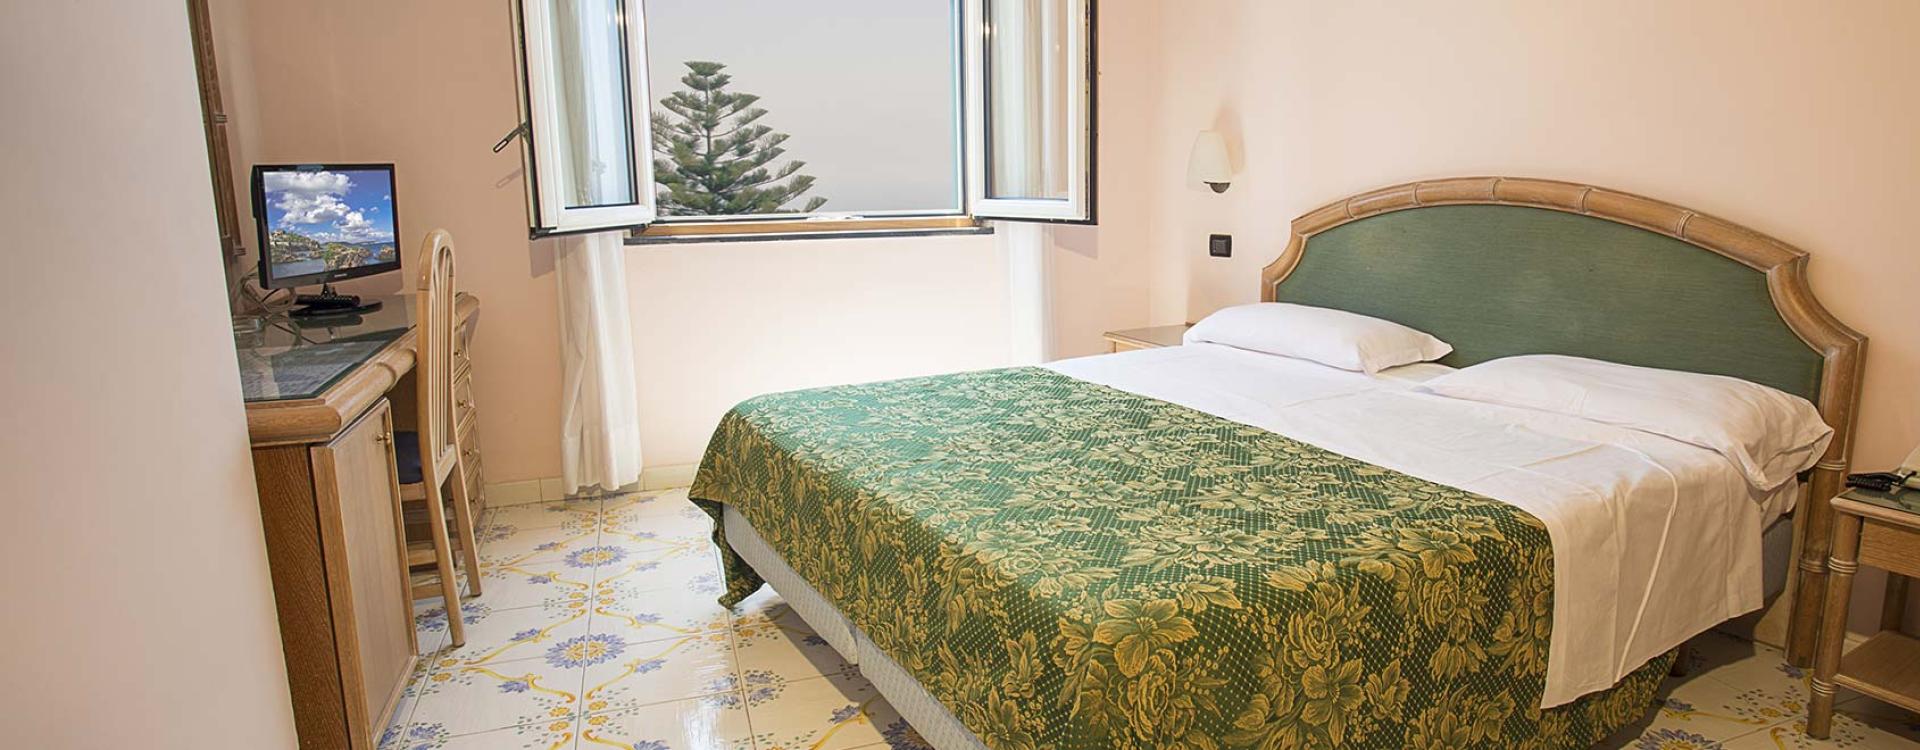 hotelsaintraphaelischia it camere-hotel-ischia 009